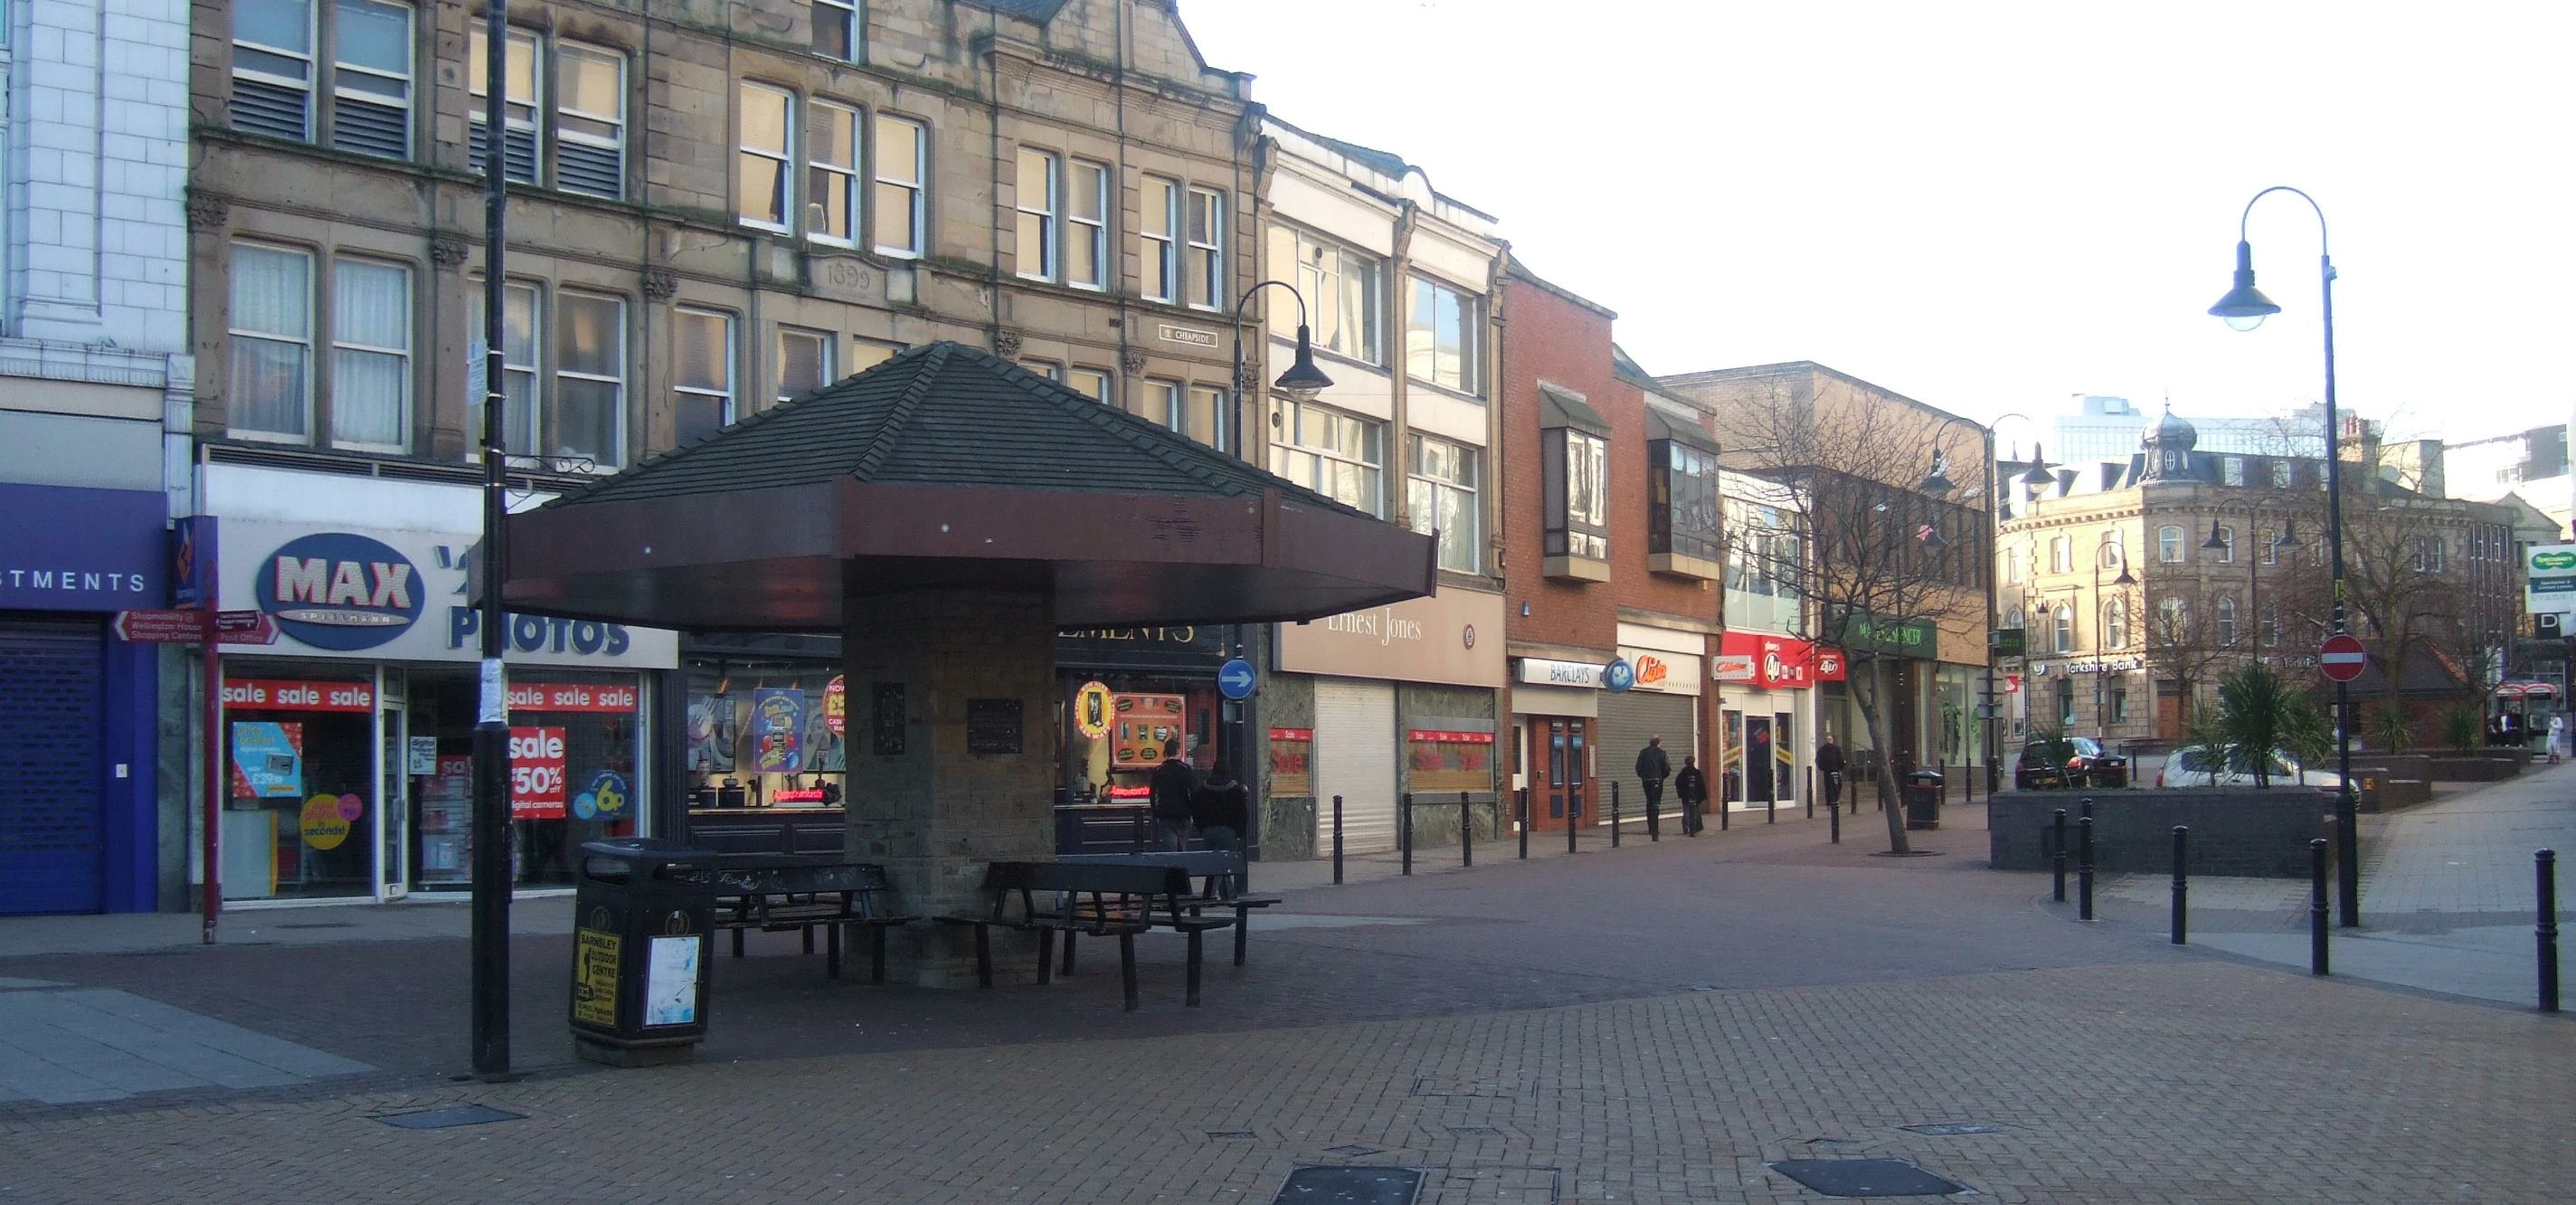 Barnsley town centre